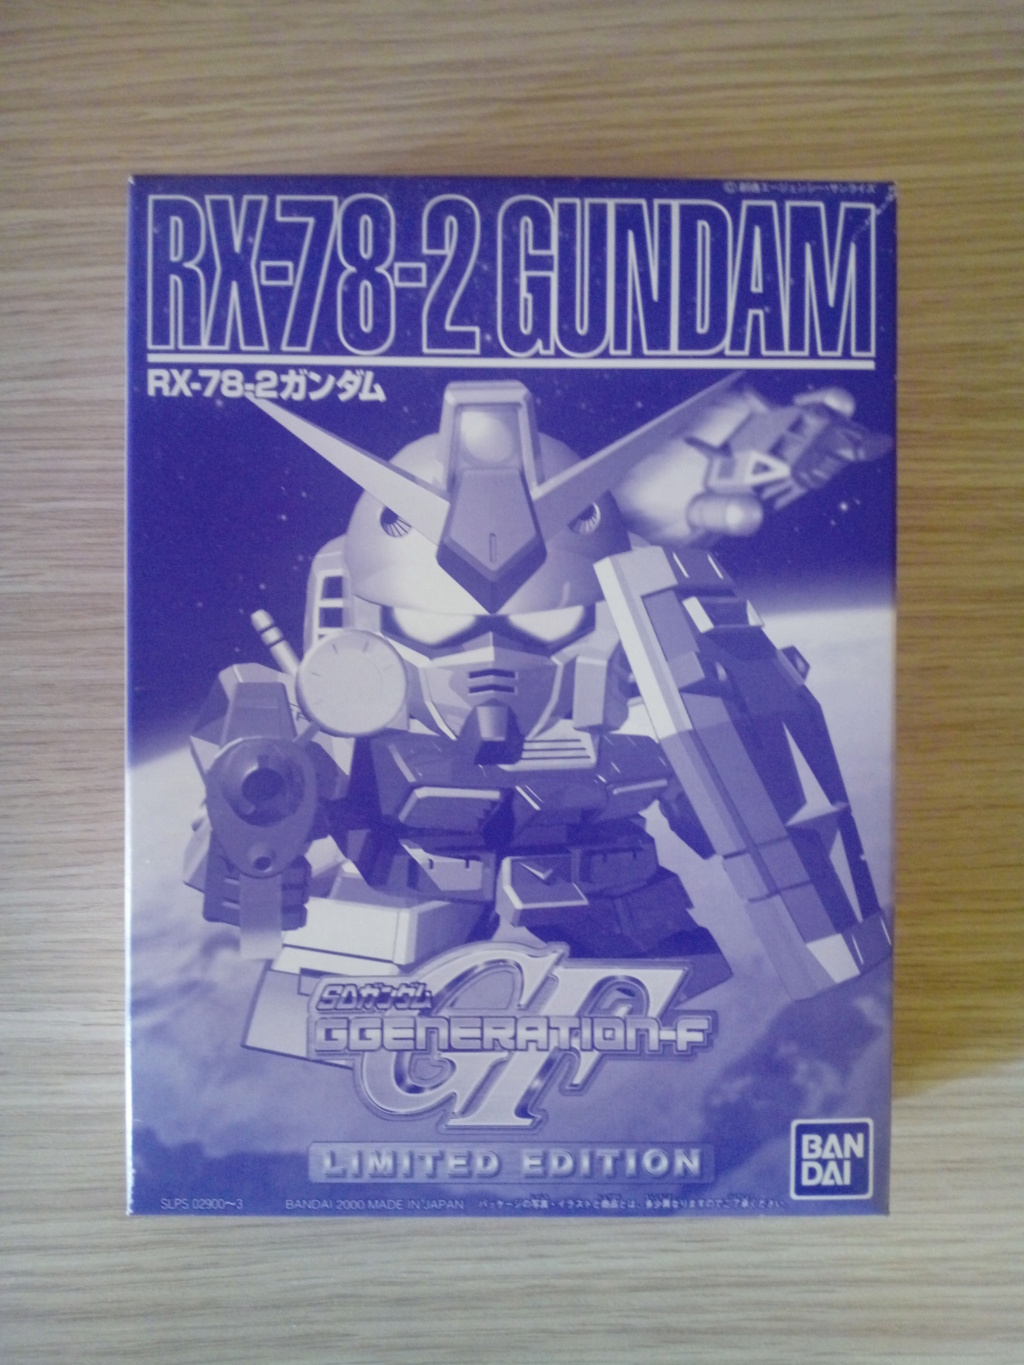 gundam - GUNDAM RX-78-2 * Model kit * BANDAI 2000 * Limited Edition Img_2035